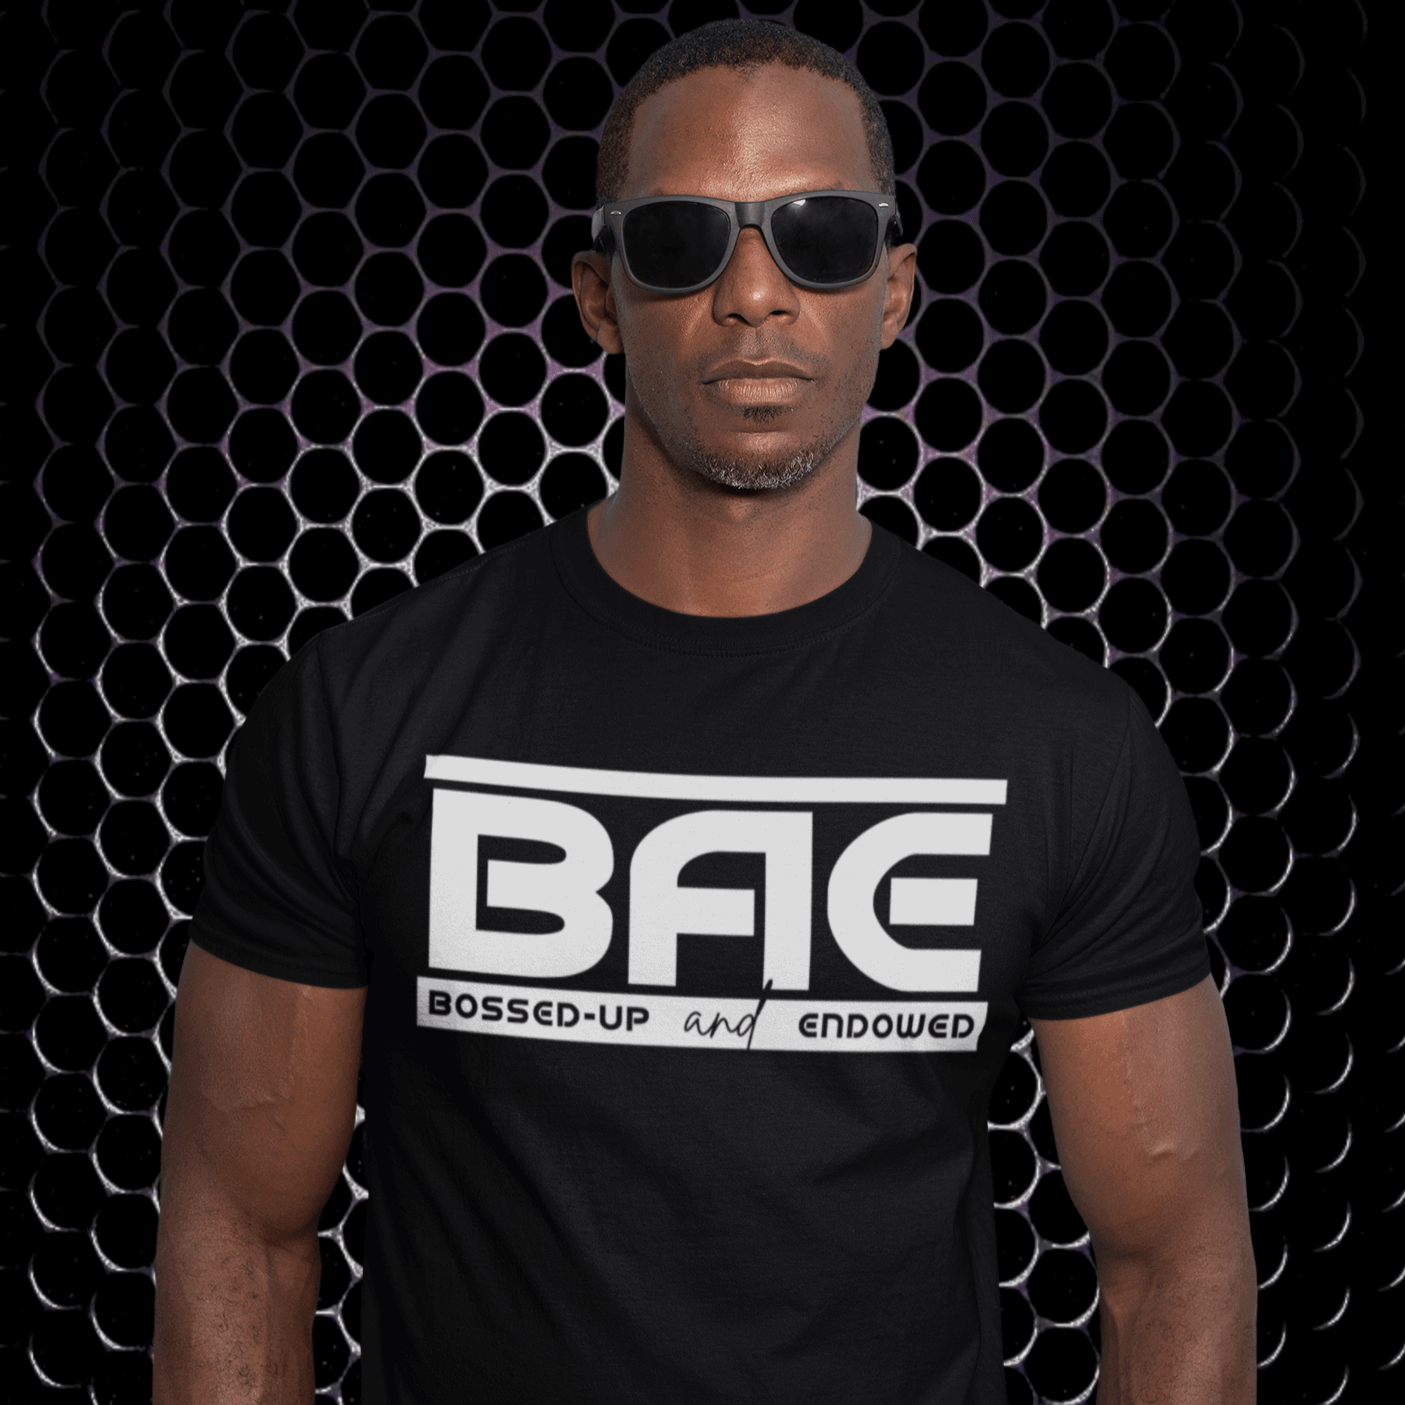 BAE Shirt Bossed-Up And Endowed bae t shirt - Wilson Design Group